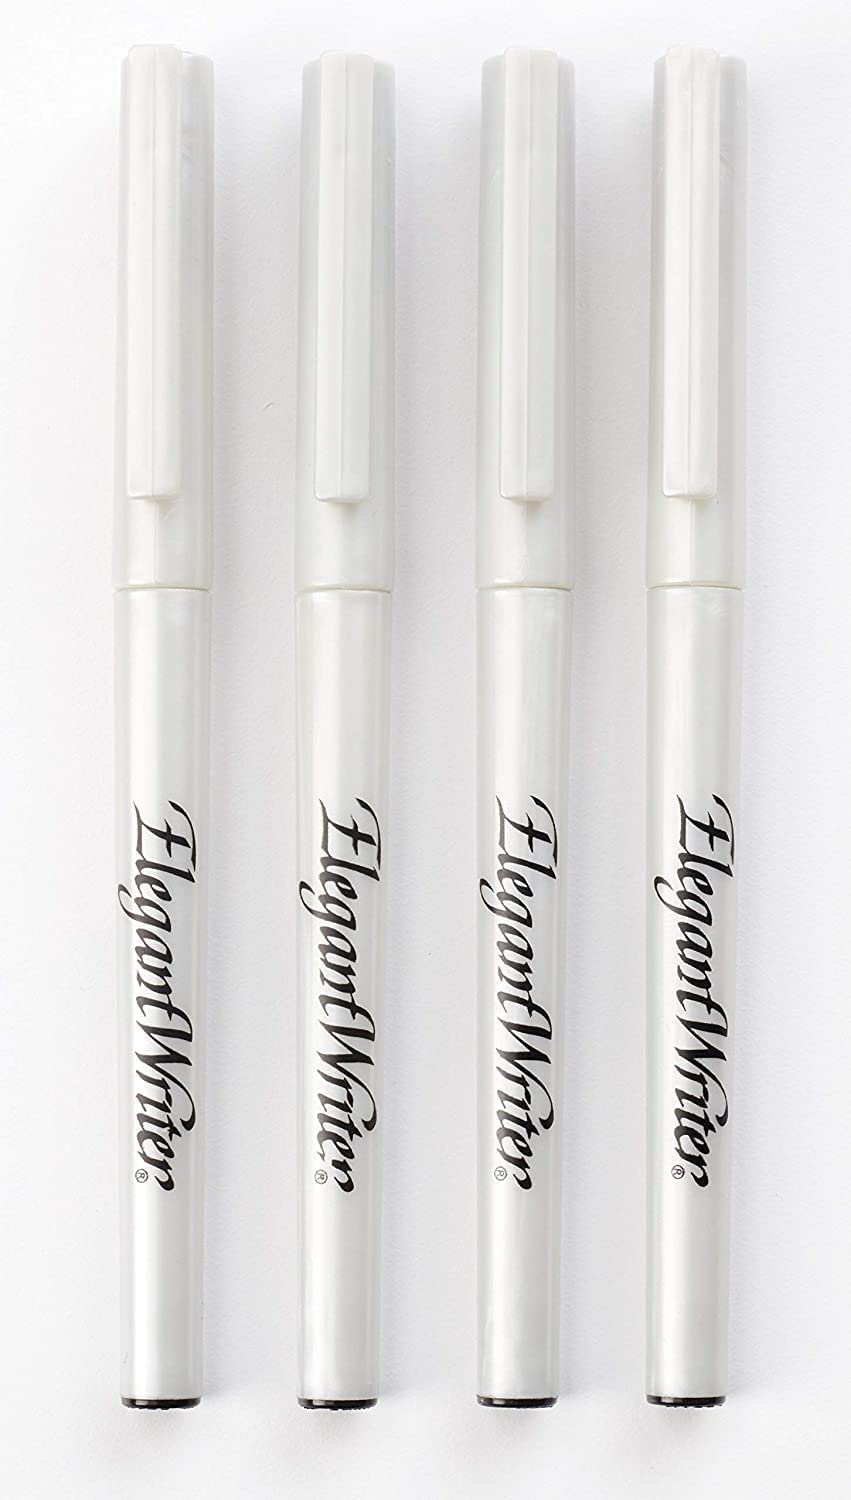 Speedball Elegant Writer Calligraphy 4 Marker Set, Black, 2.0 mm, 2.5 mm & 3.0 mm Chisel Nib Tip Pens for Drawing, Journaling, and Scrapbooking